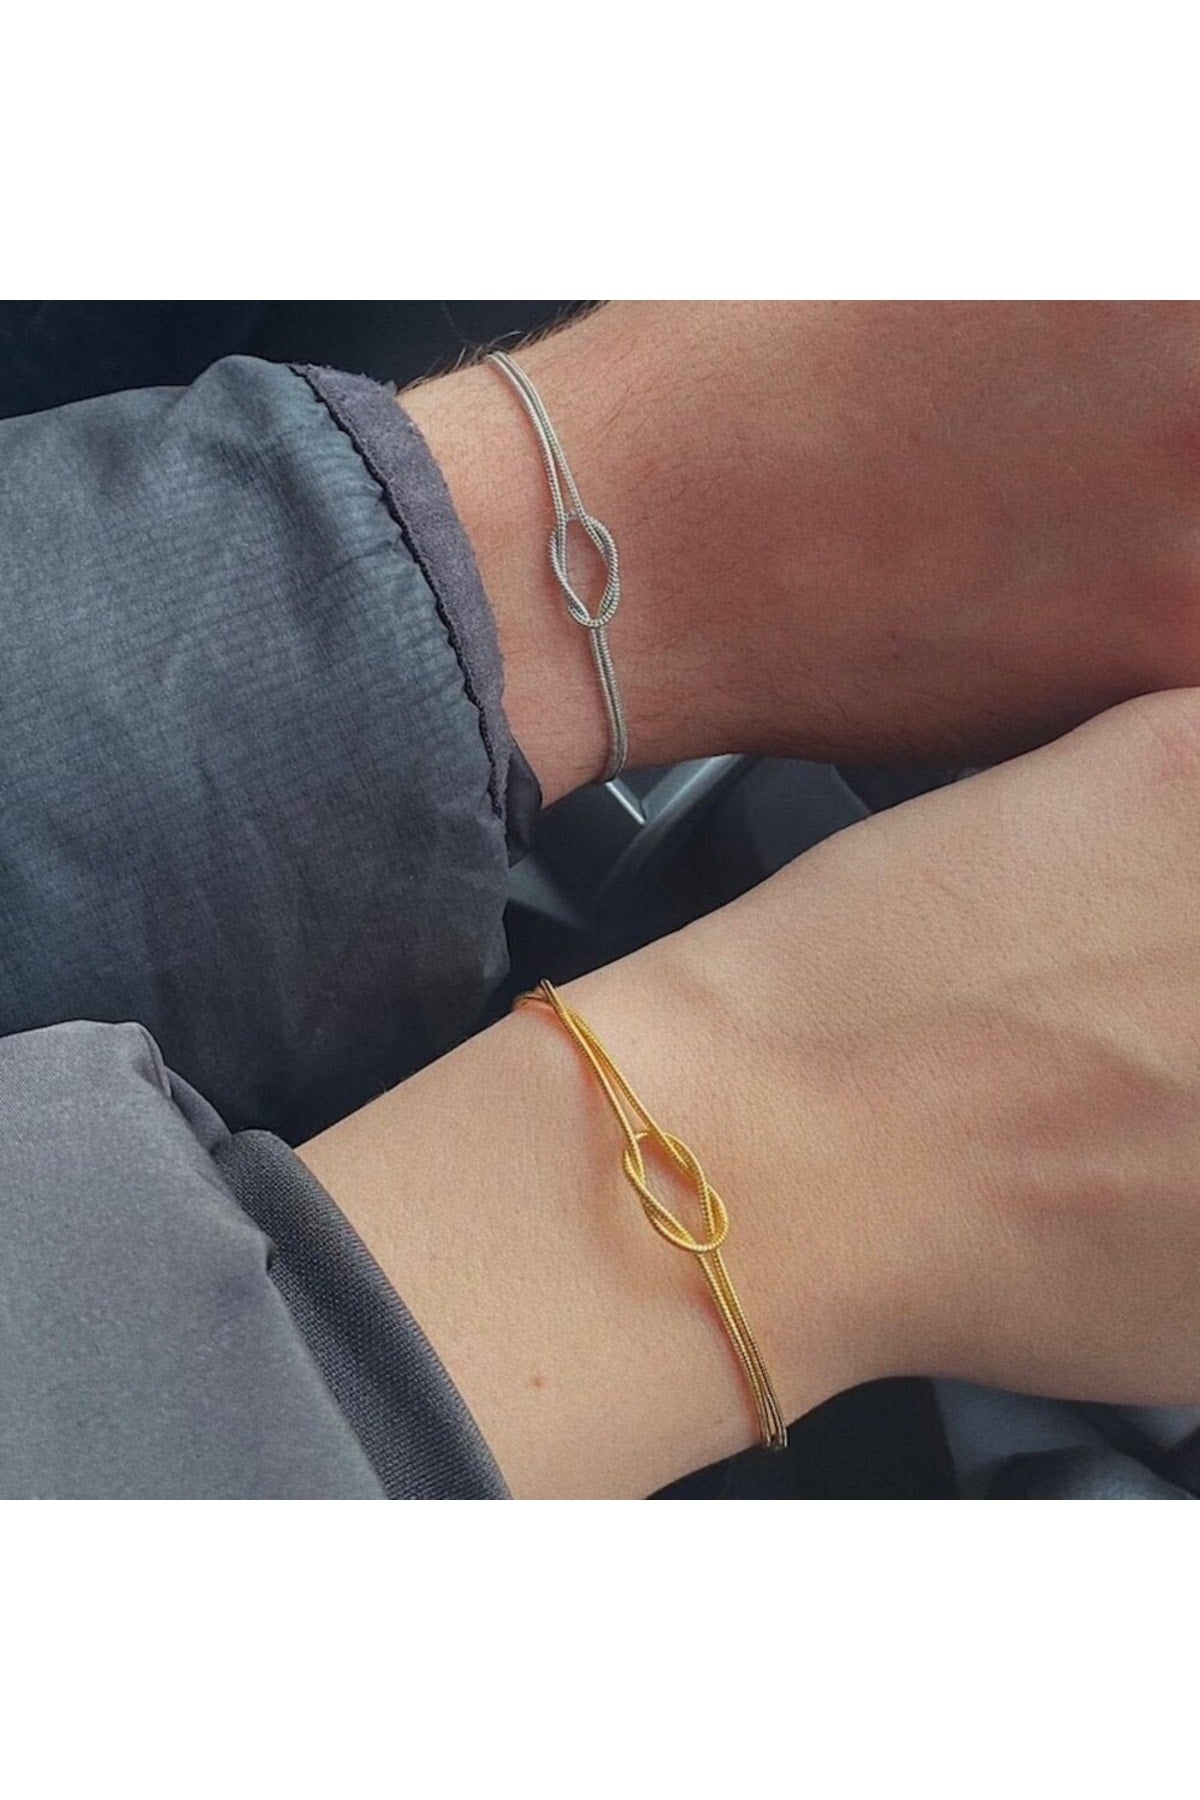 Knot Model Couple-friendship Bracelet Gold- Silver Color